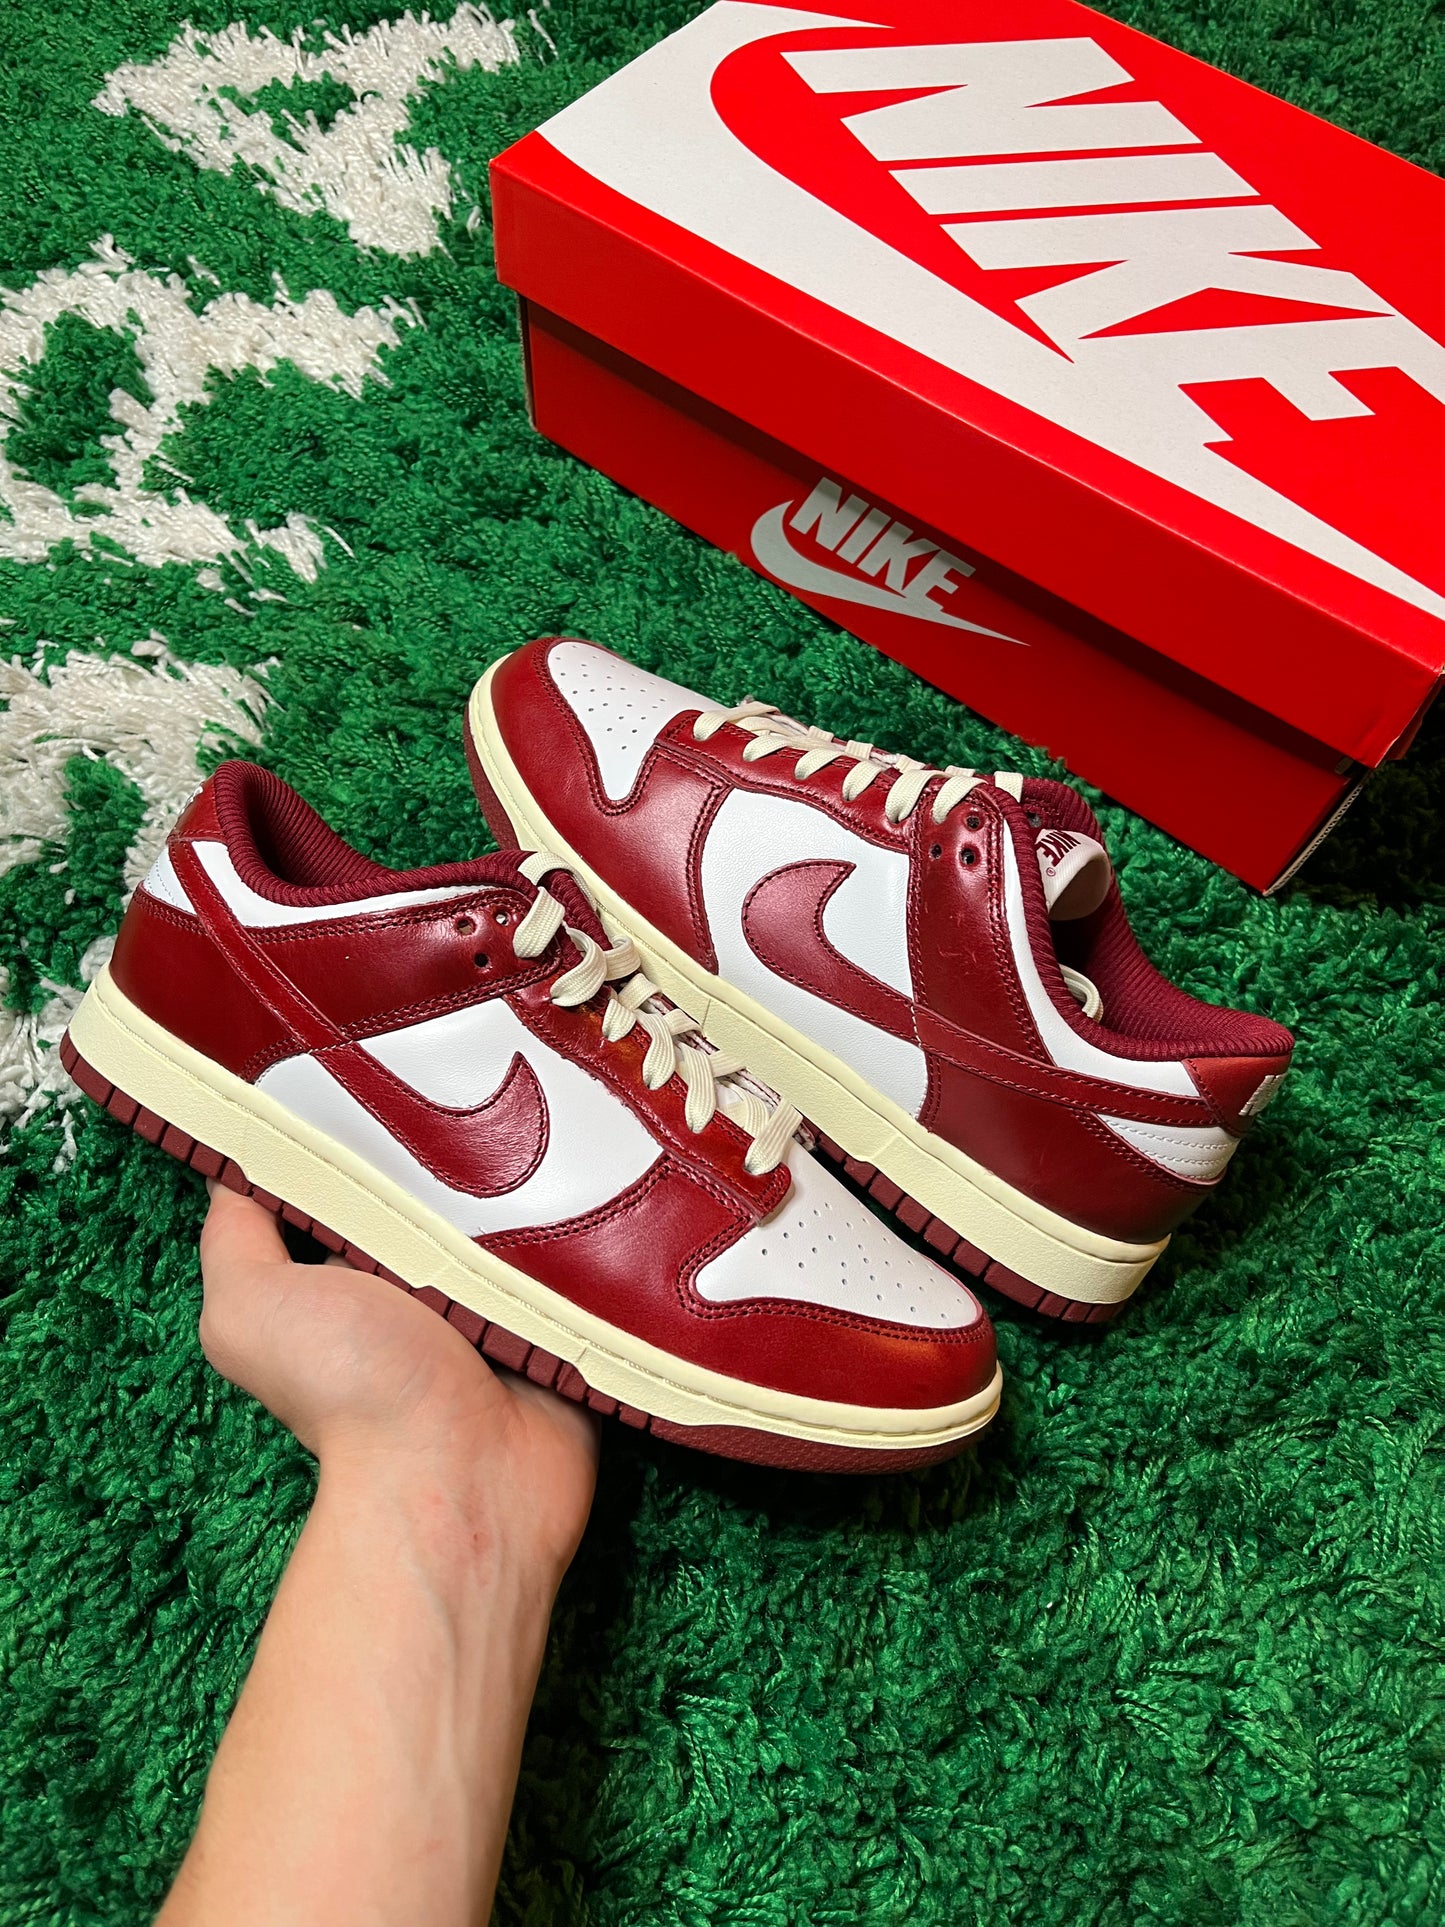 Nike Dunk Low “Vintage Red”